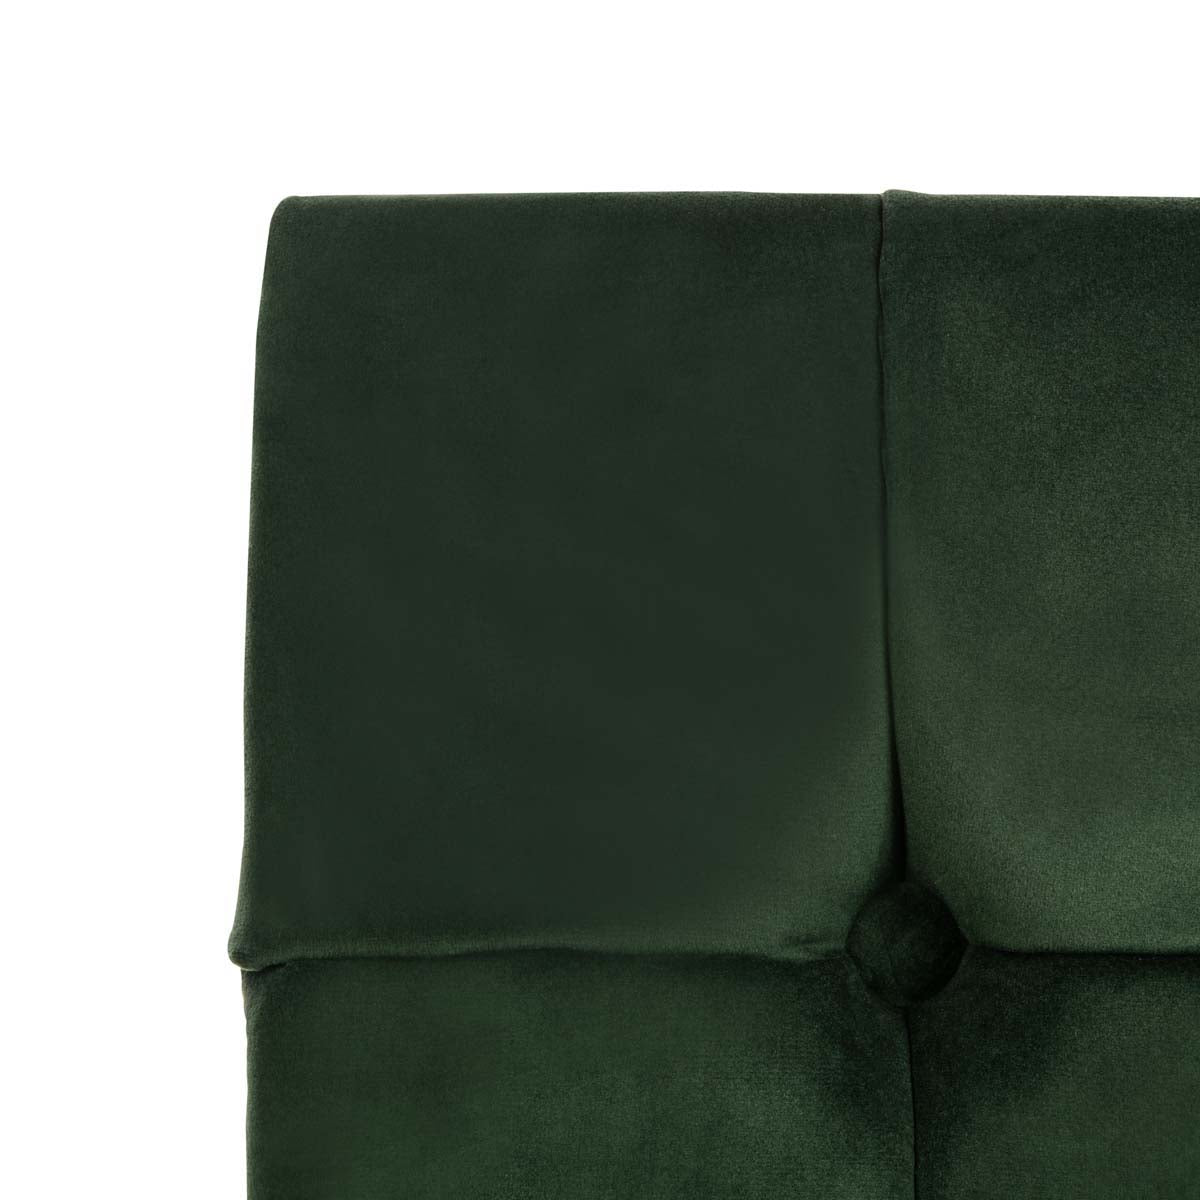 Safavieh Amaris Tufted Accent Chair , ACH4503 - Forest Green/Black